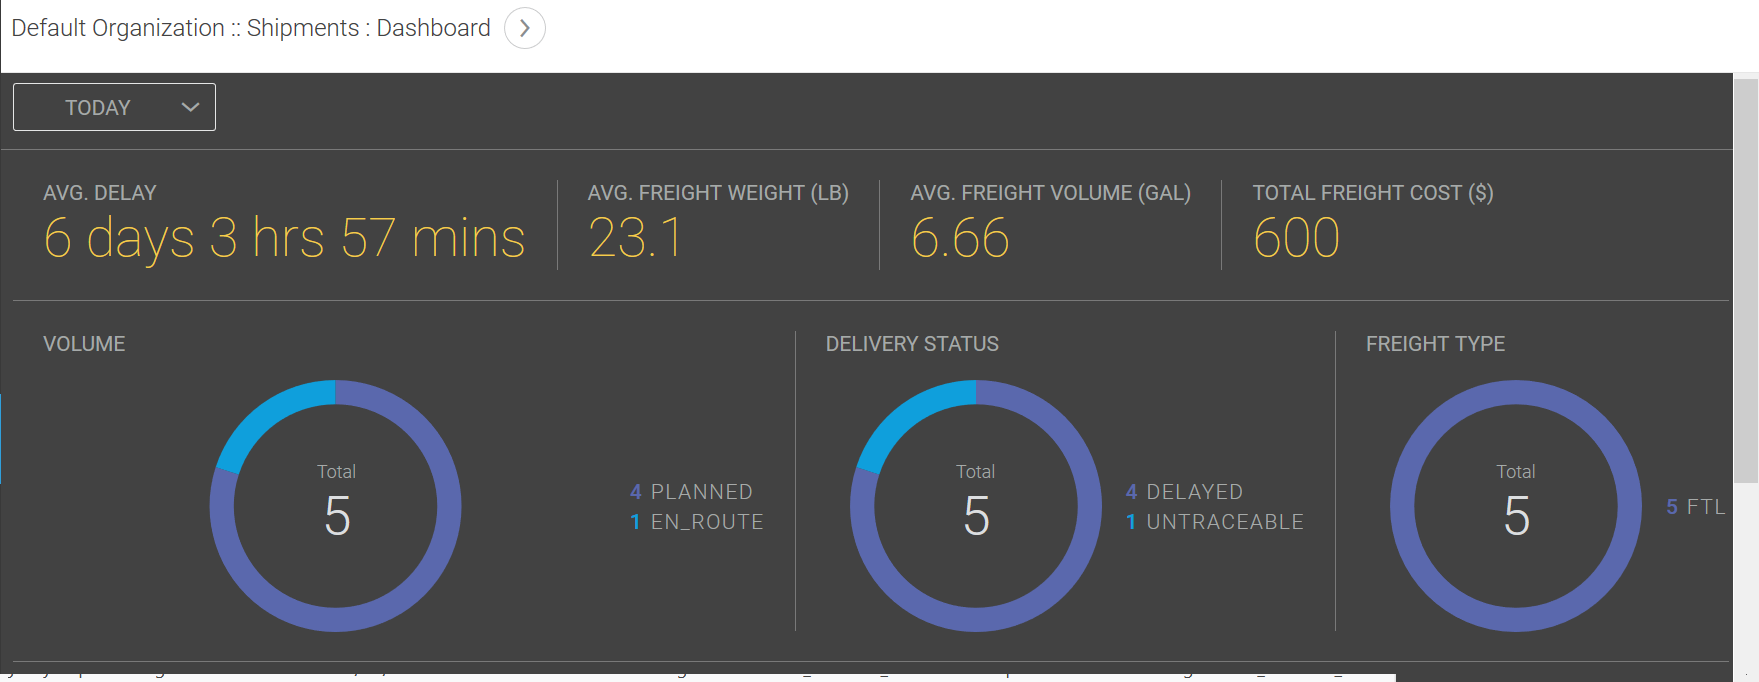 Shipments: Dashboard with performance metrics